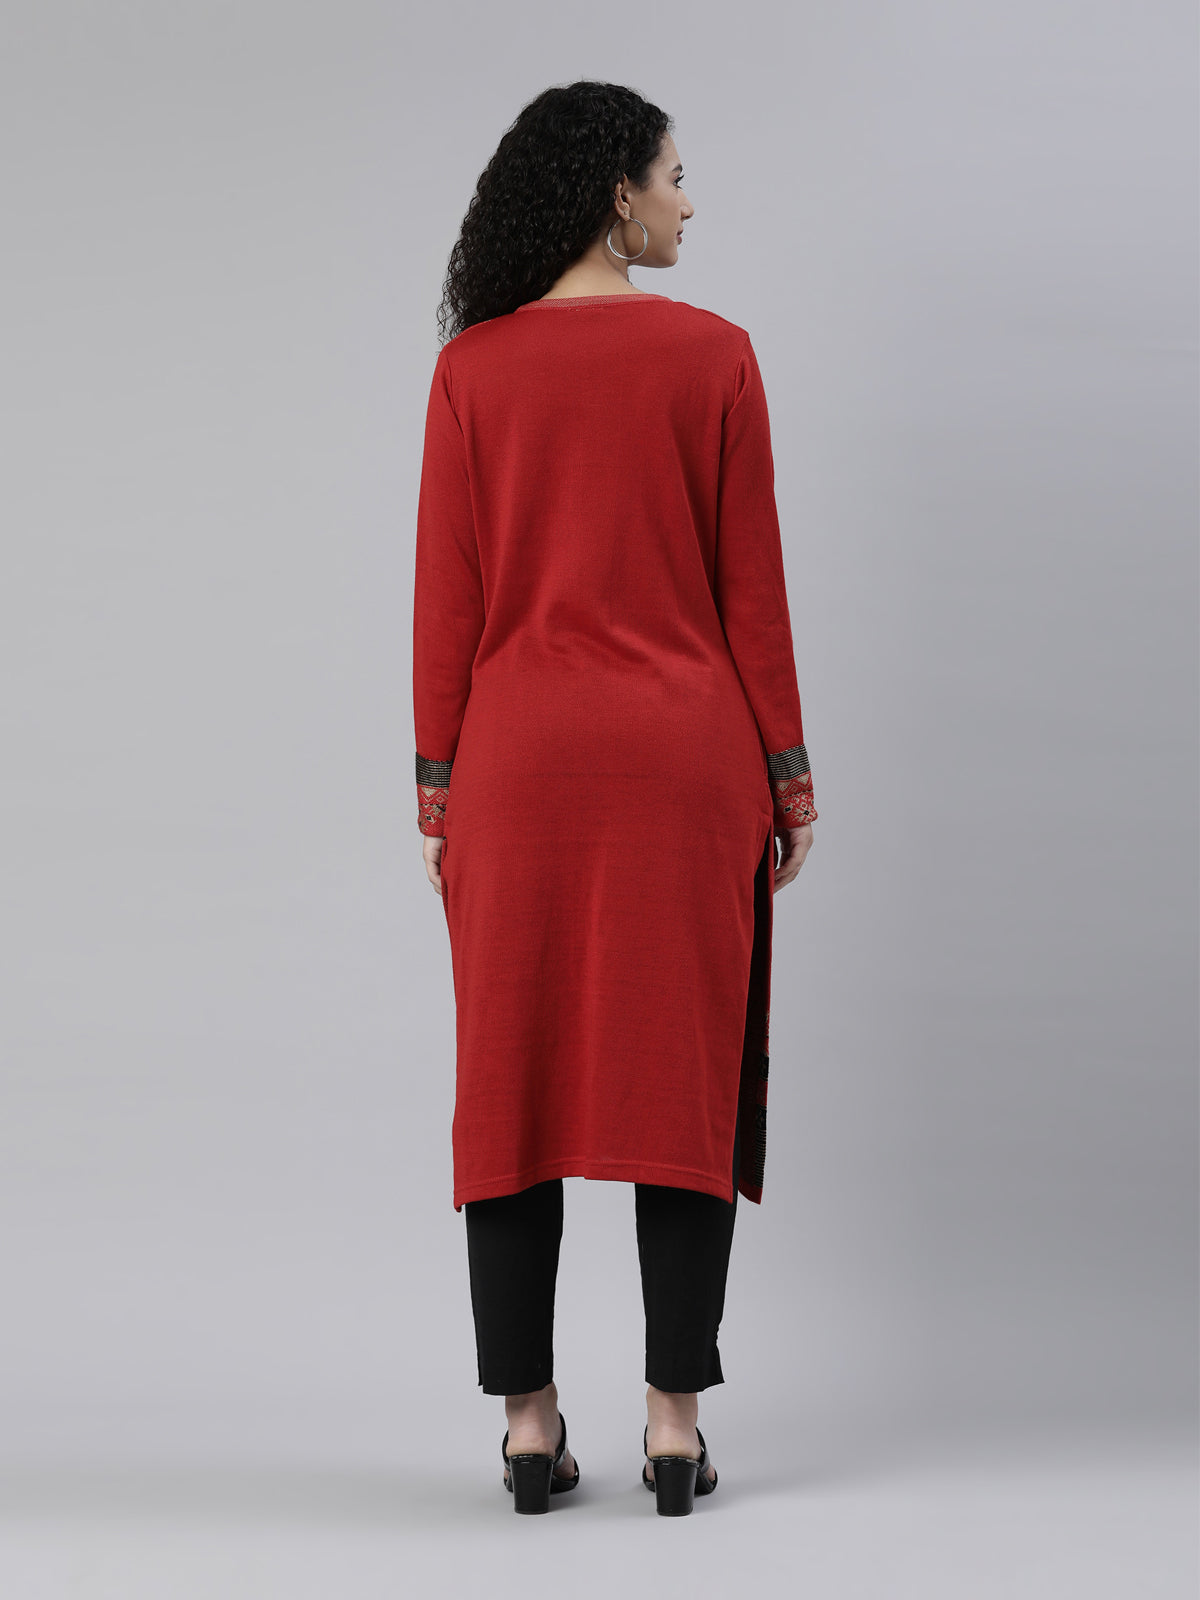 Neerus Winter Wear  Red  Black Ethnic Motifs Acrylic Kurta For Women